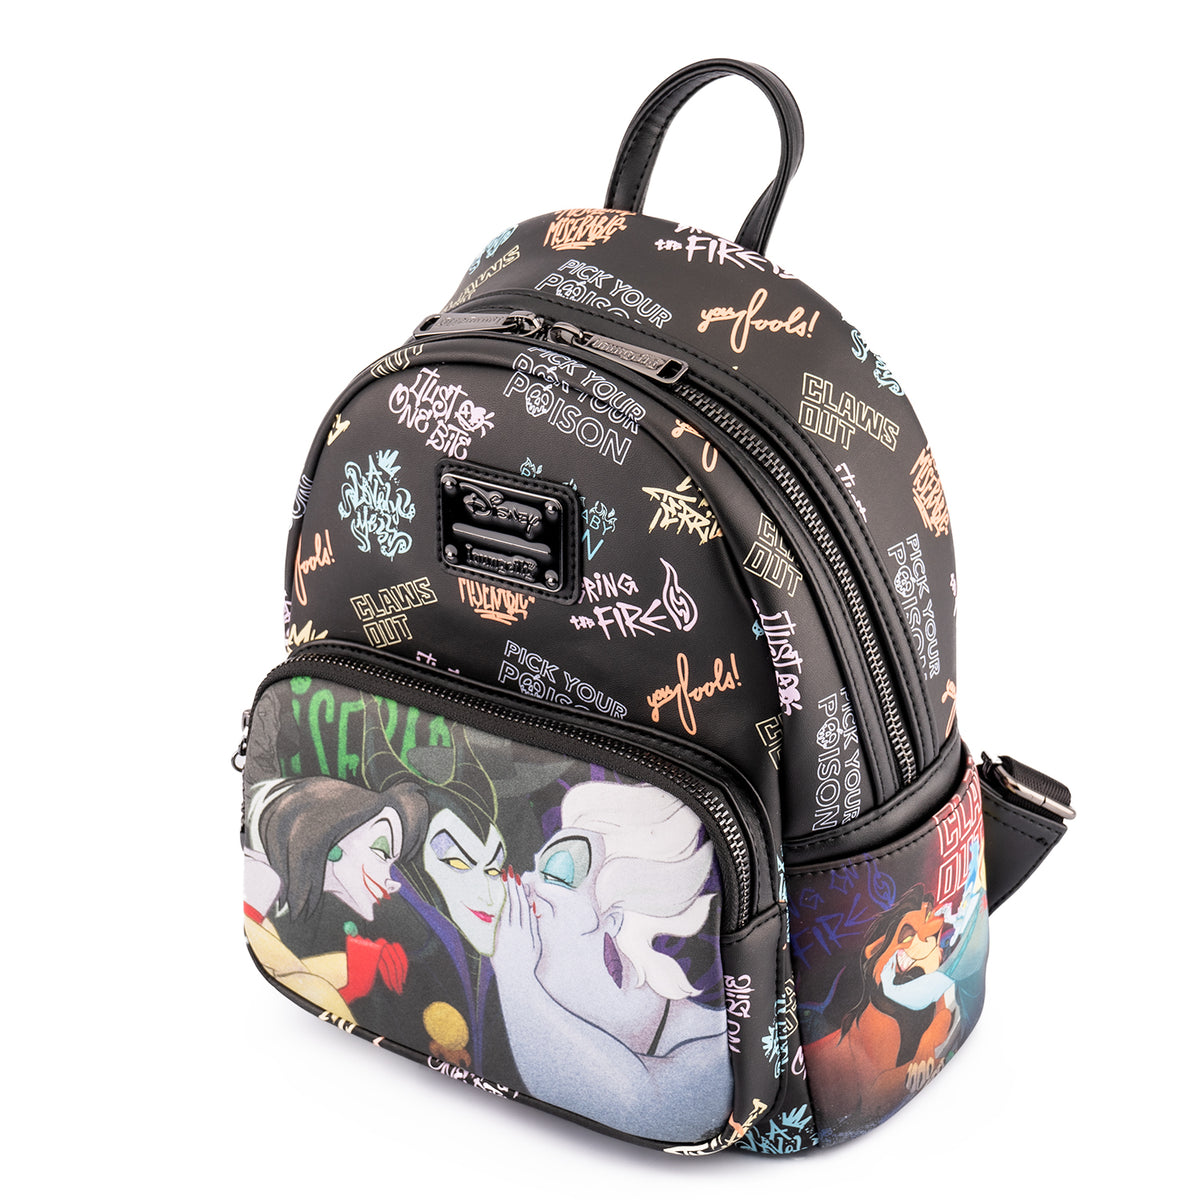 Disney Loungefly Villains Purse  Black duffel bag, Loungefly purse, Purses